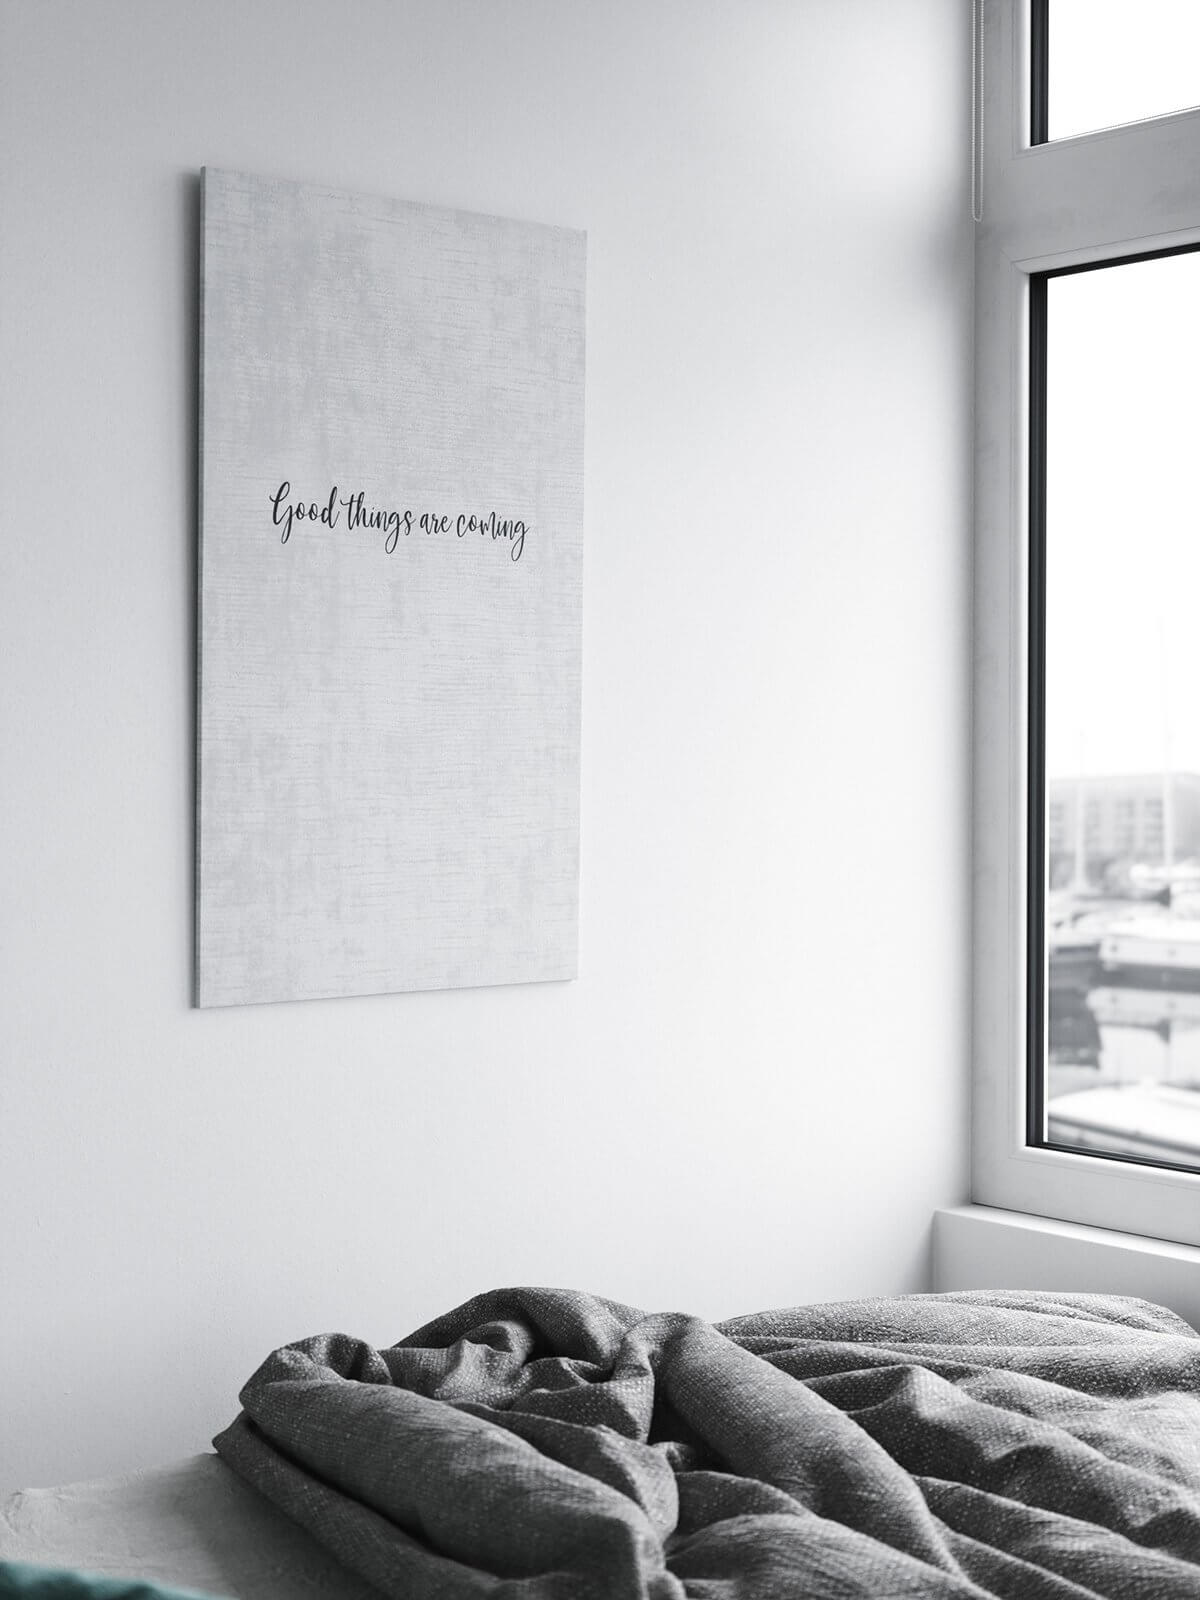 Small apartment bedroom picture - cgi visualization